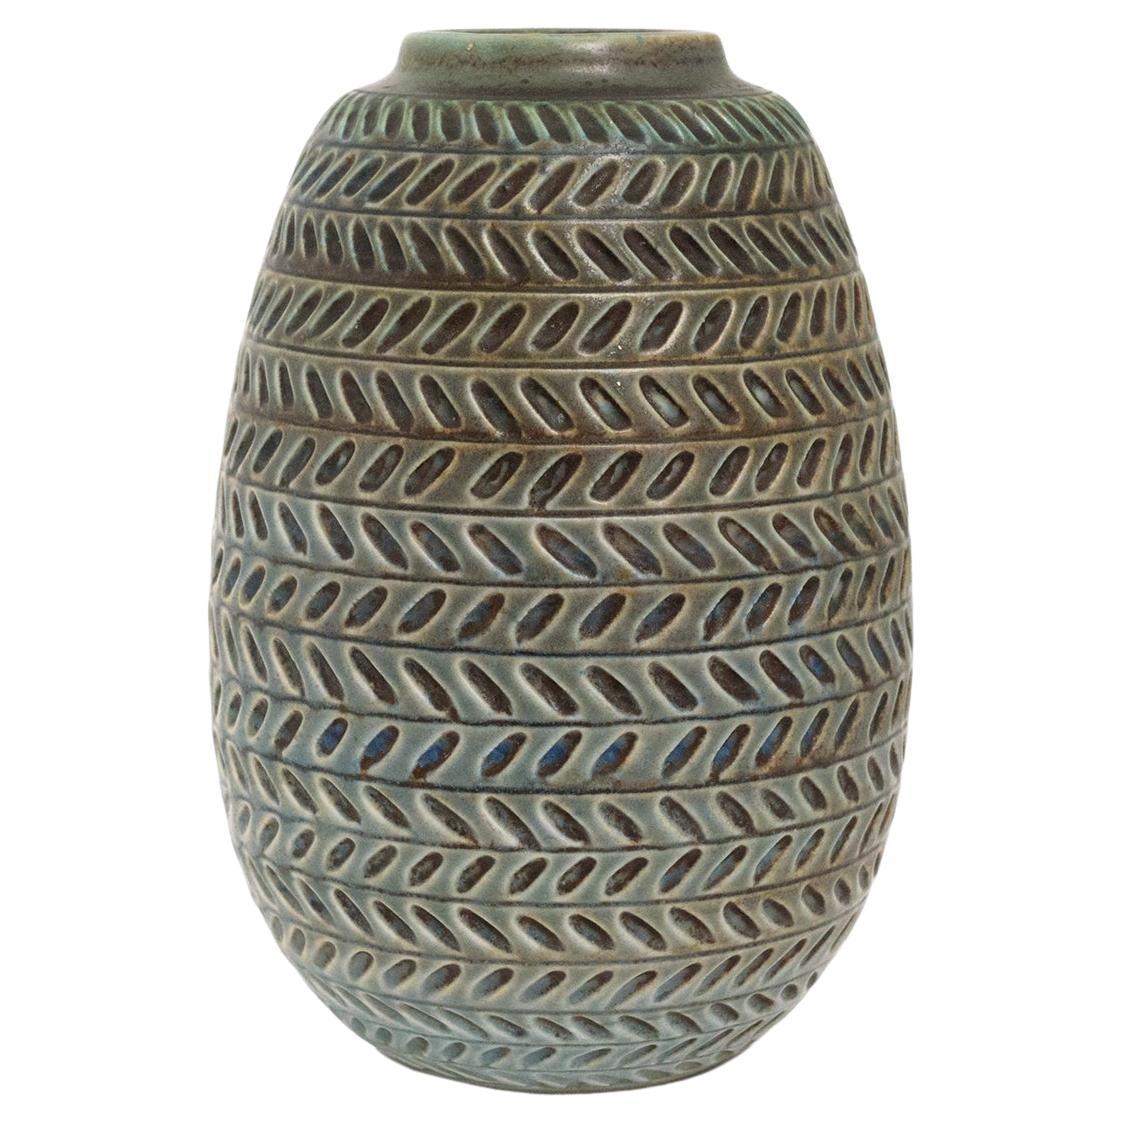 Gertrud Lonegren Textured Color Glazed Ceramic Vase, Rorstrand, 1940's